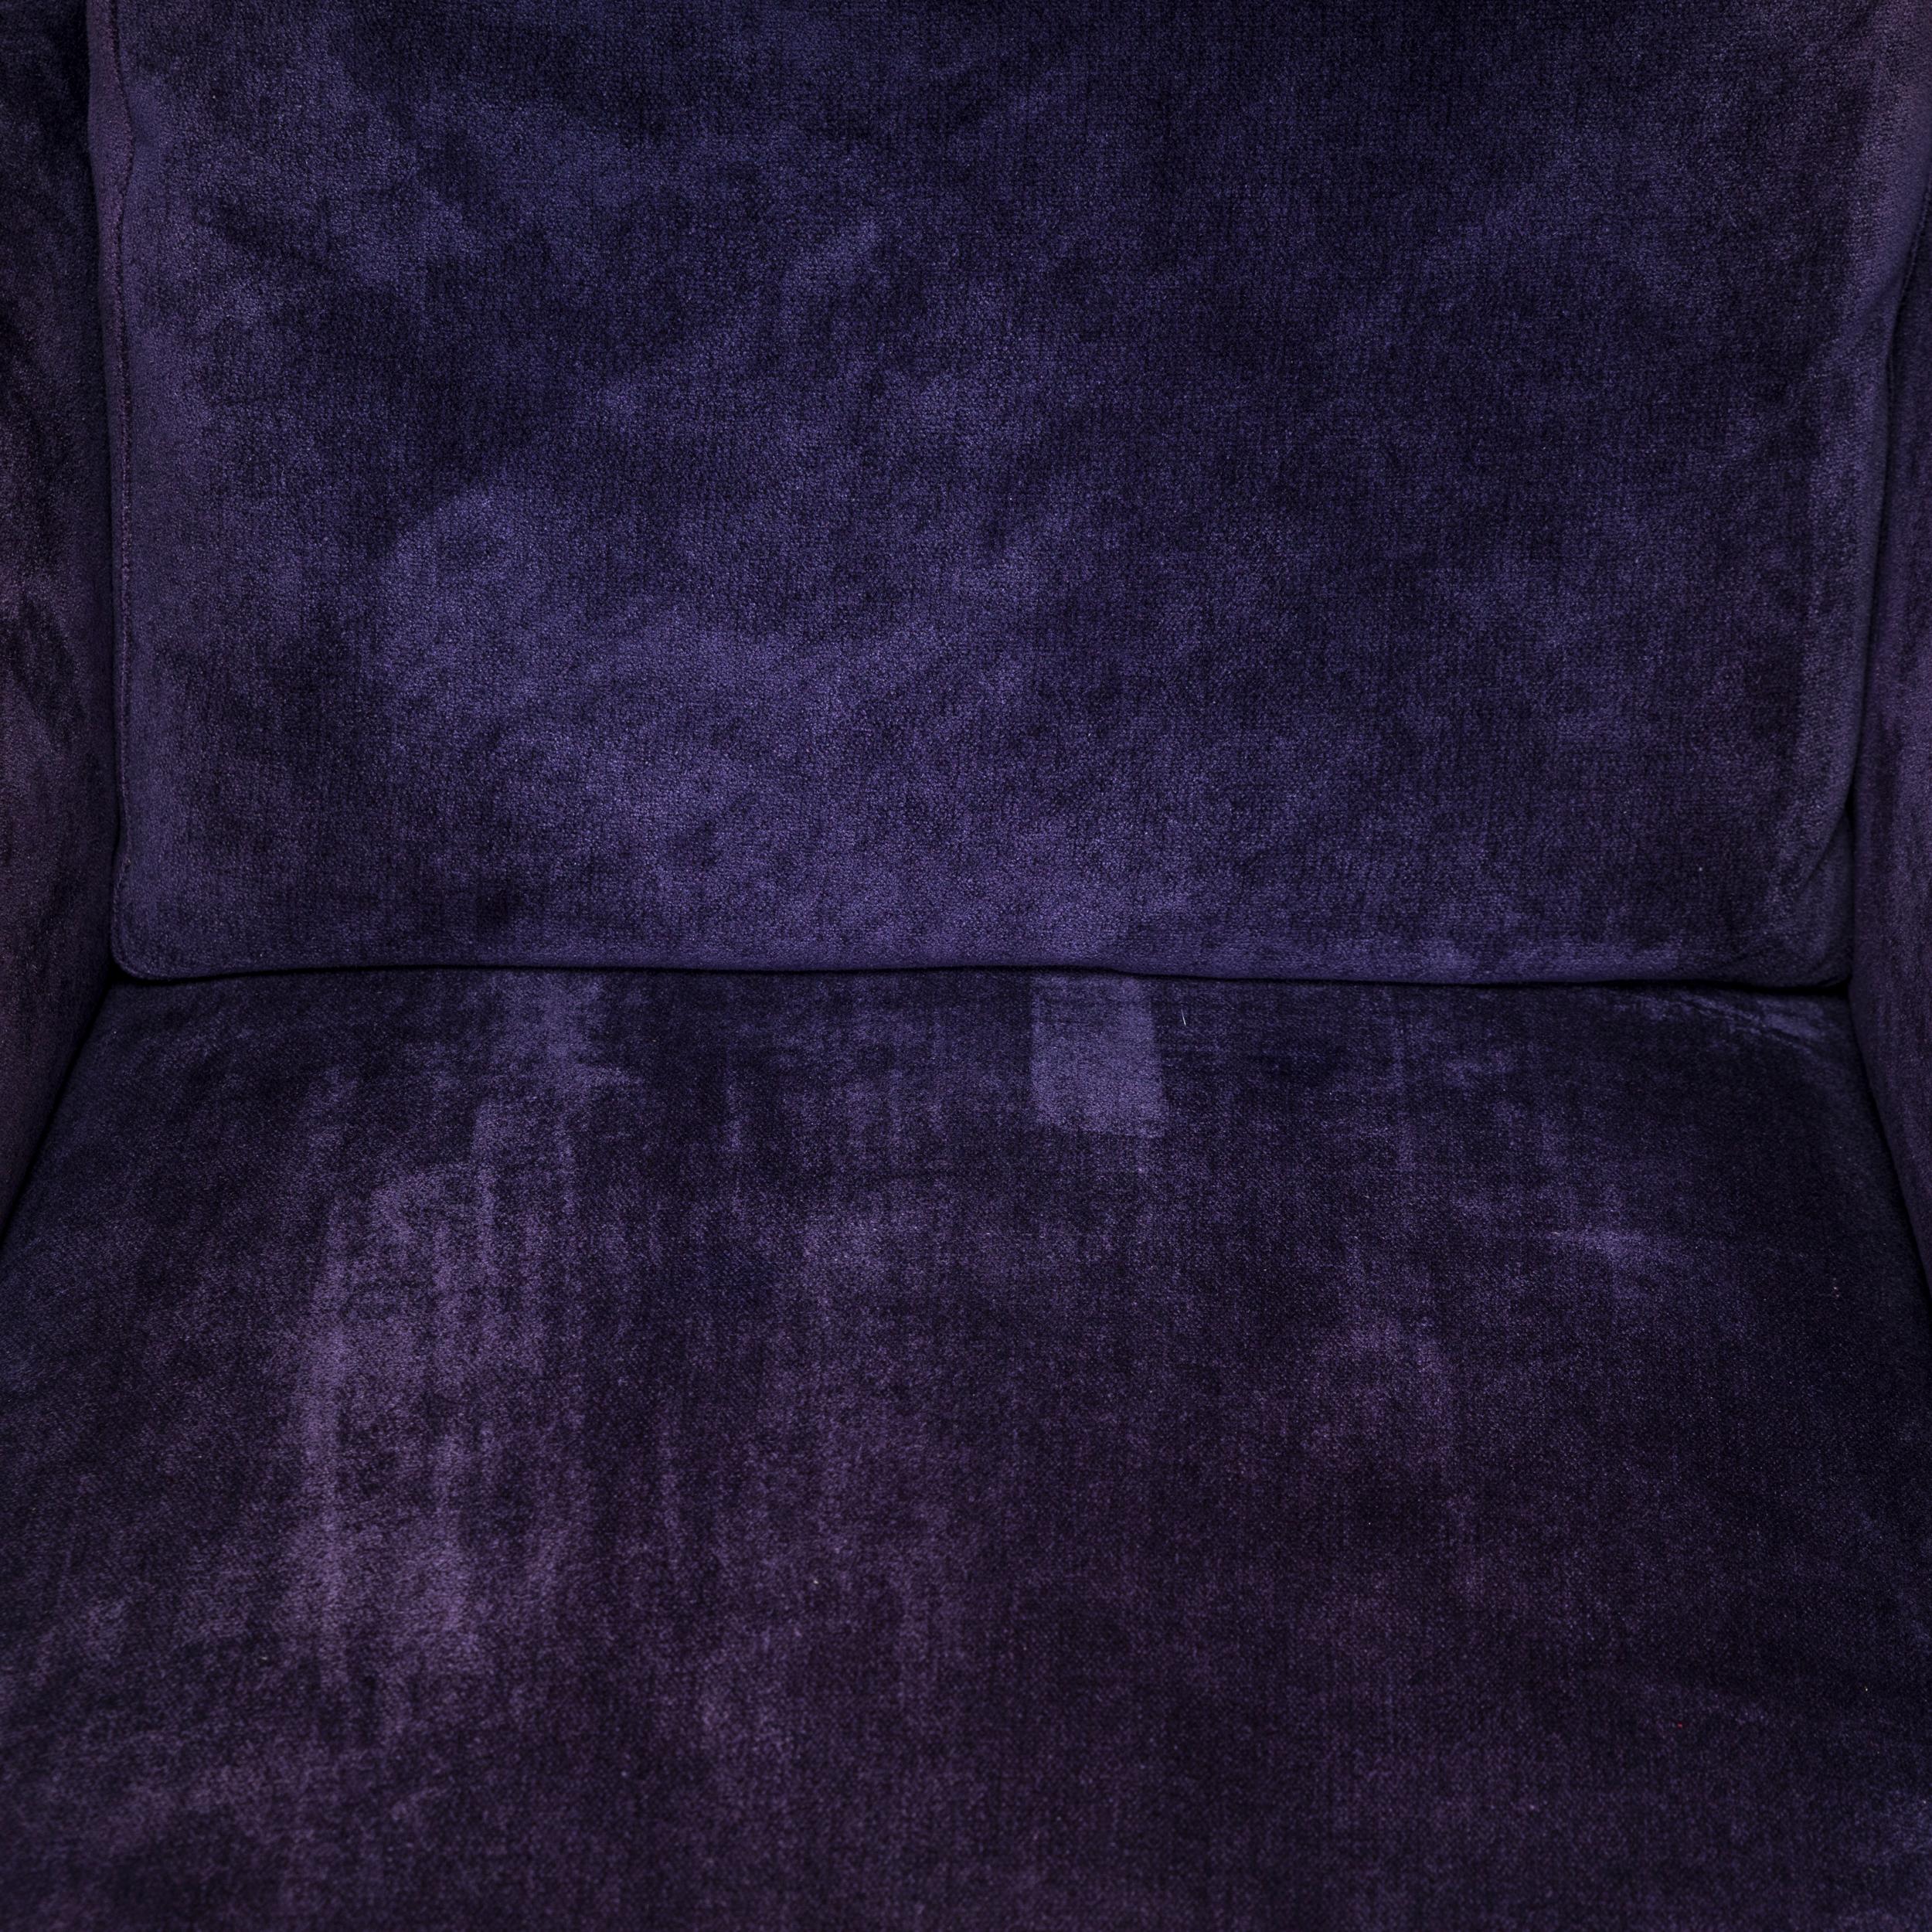 B&B Italia Antonio Citterio Dark Purple Fabric Harry Armchairs, Set of 2 For Sale 4